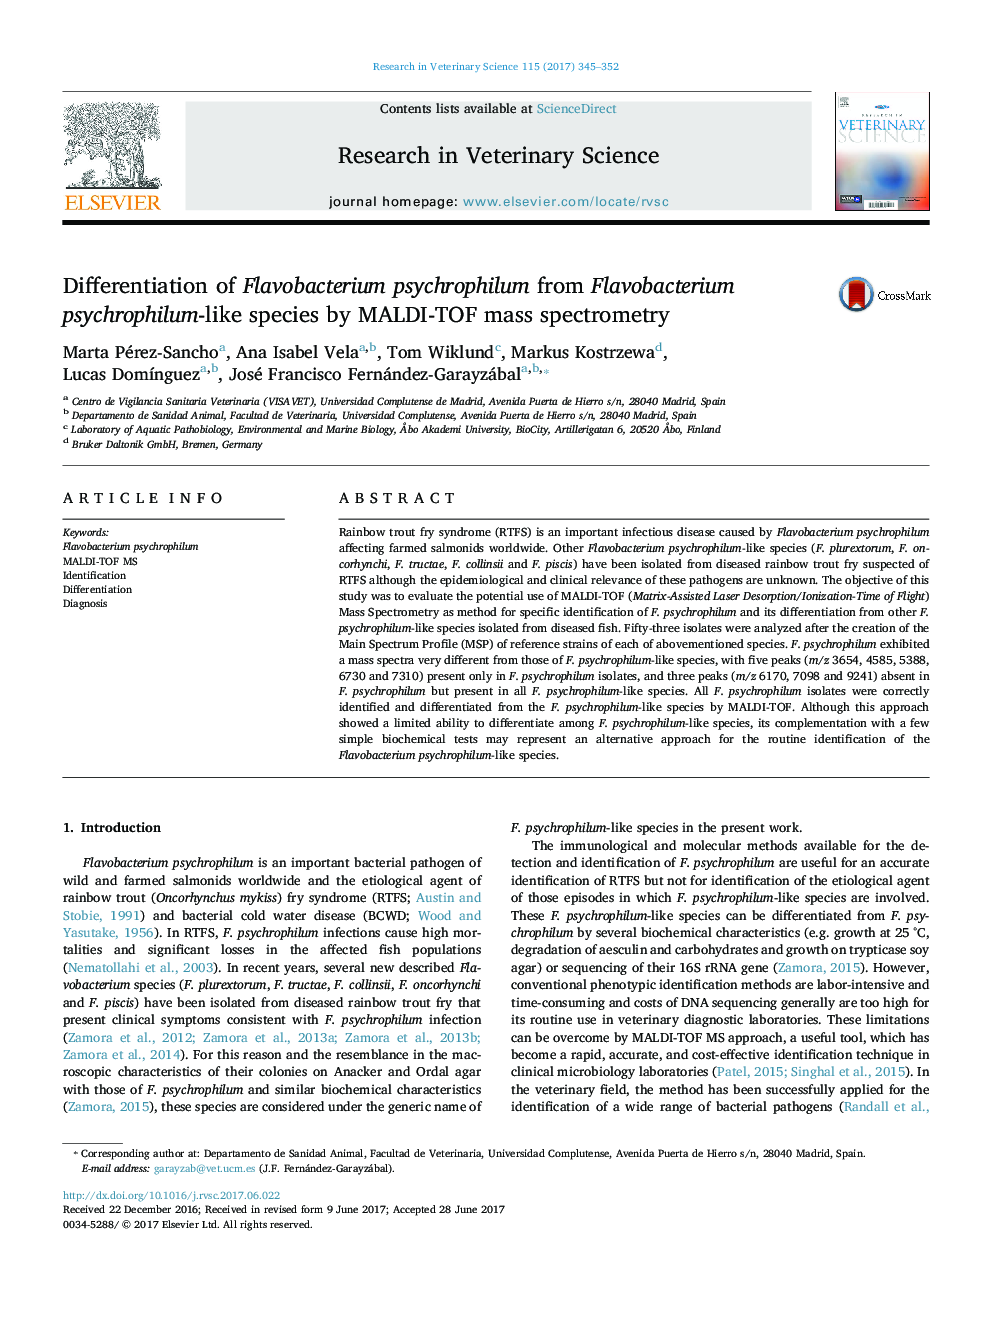 Differentiation of Flavobacterium psychrophilum from Flavobacterium psychrophilum-like species by MALDI-TOF mass spectrometry